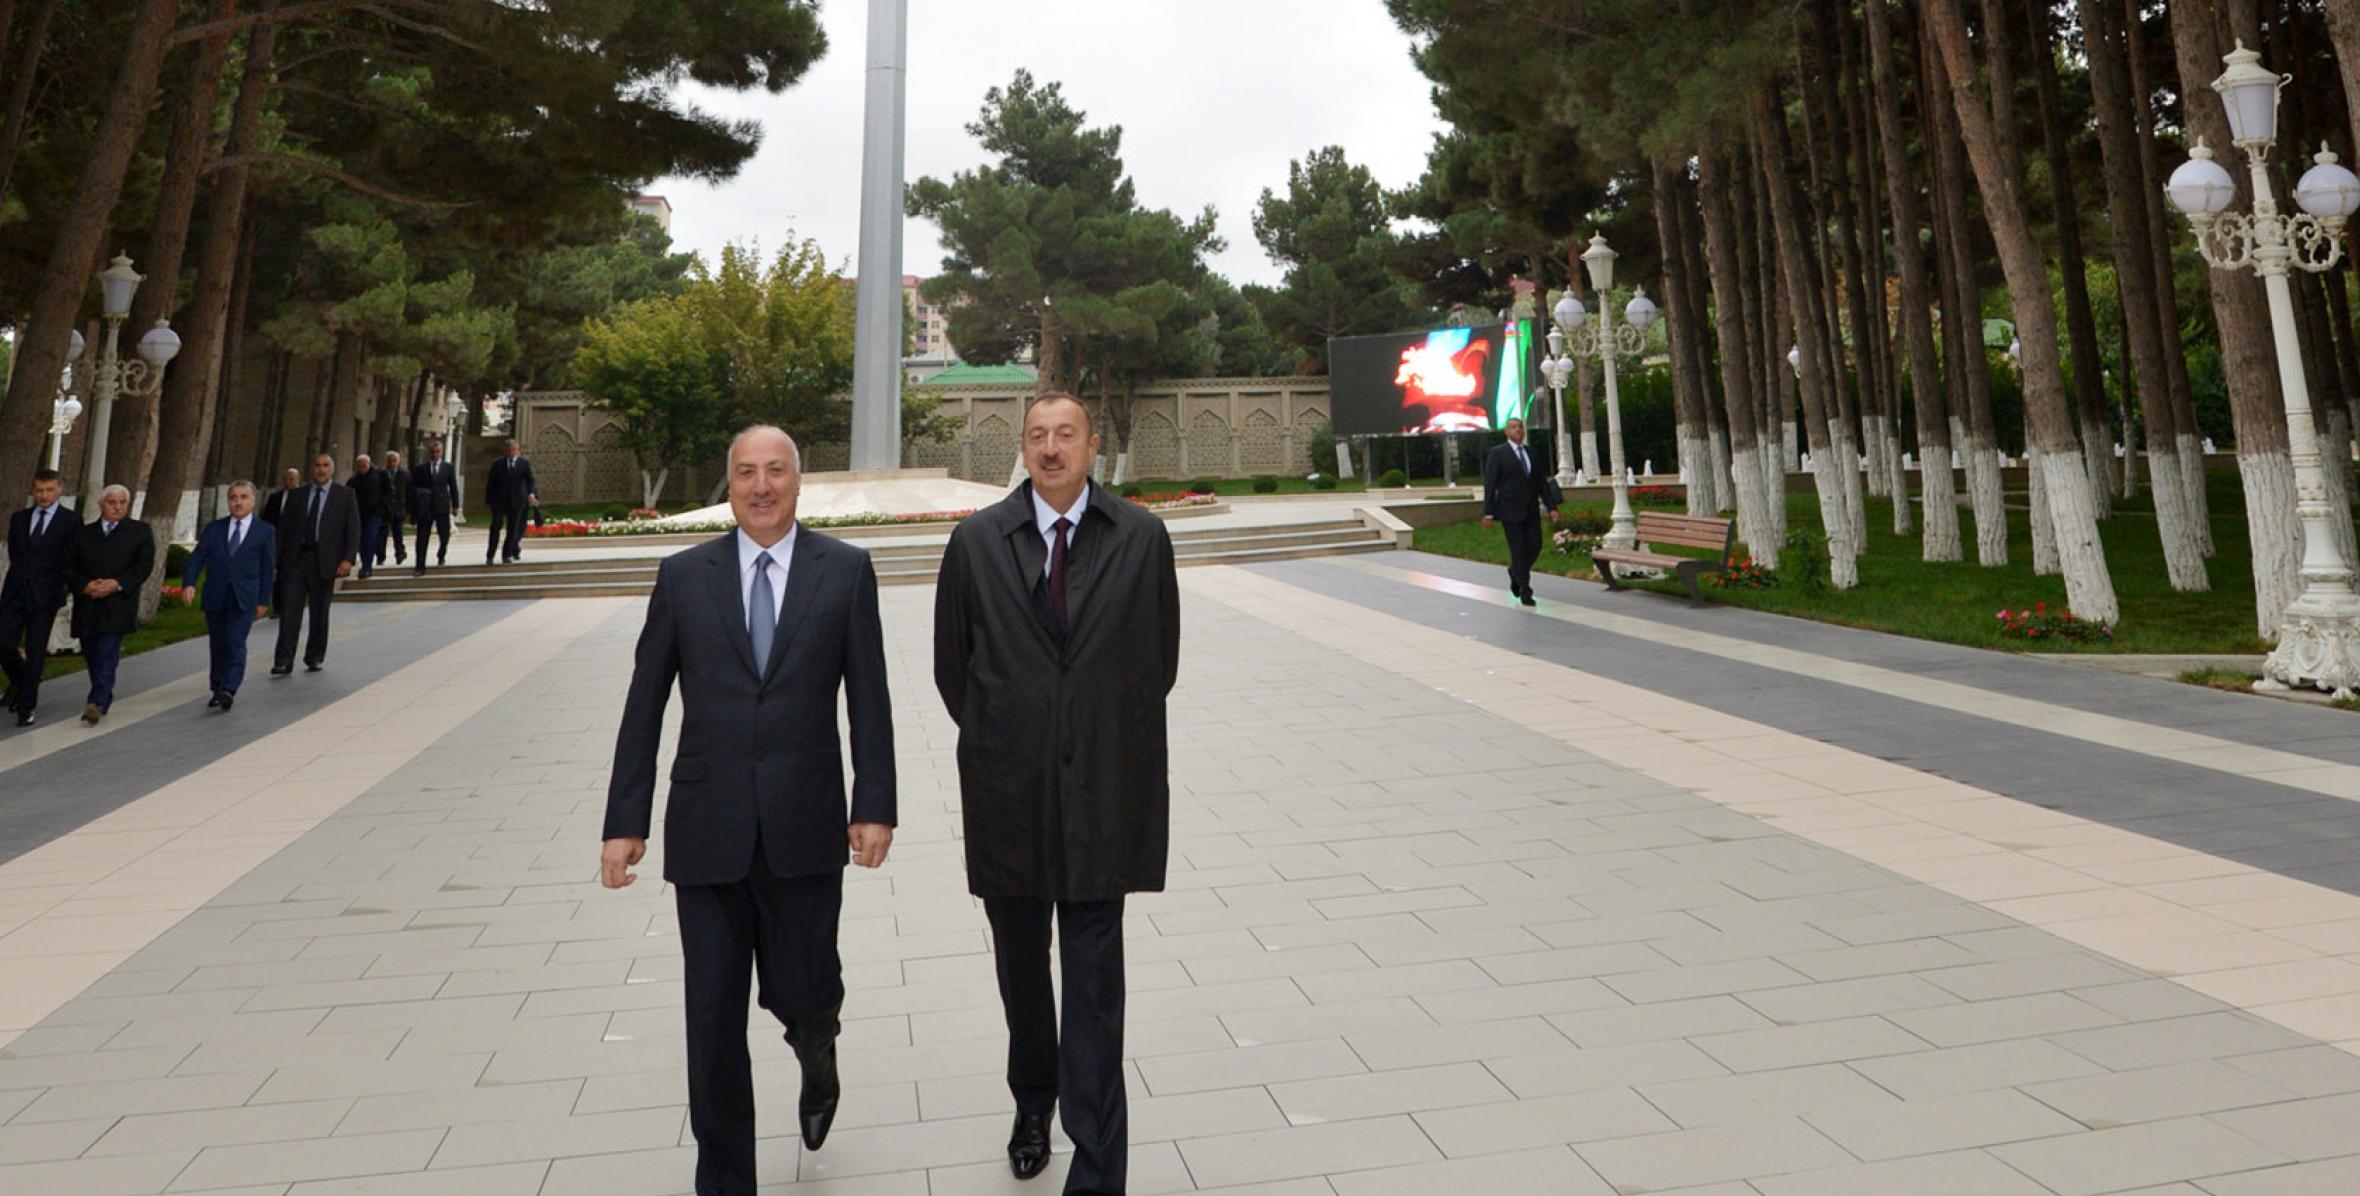 Ilham Aliyev visited the Flag Square in Khirdalan